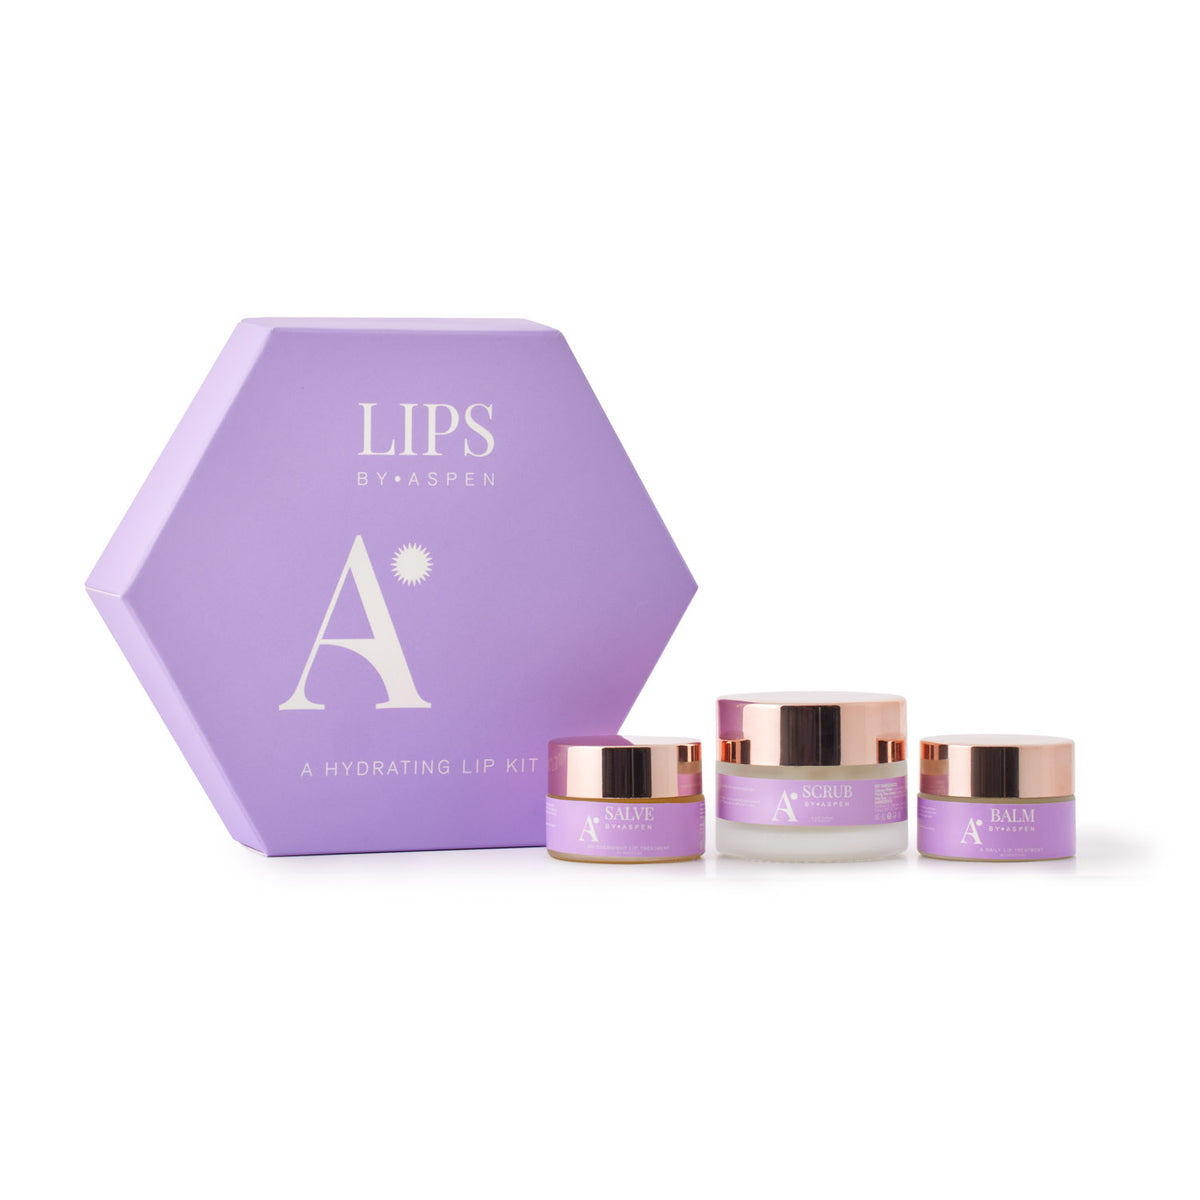 Lips by Aspen - A Hydrating Lip Kit